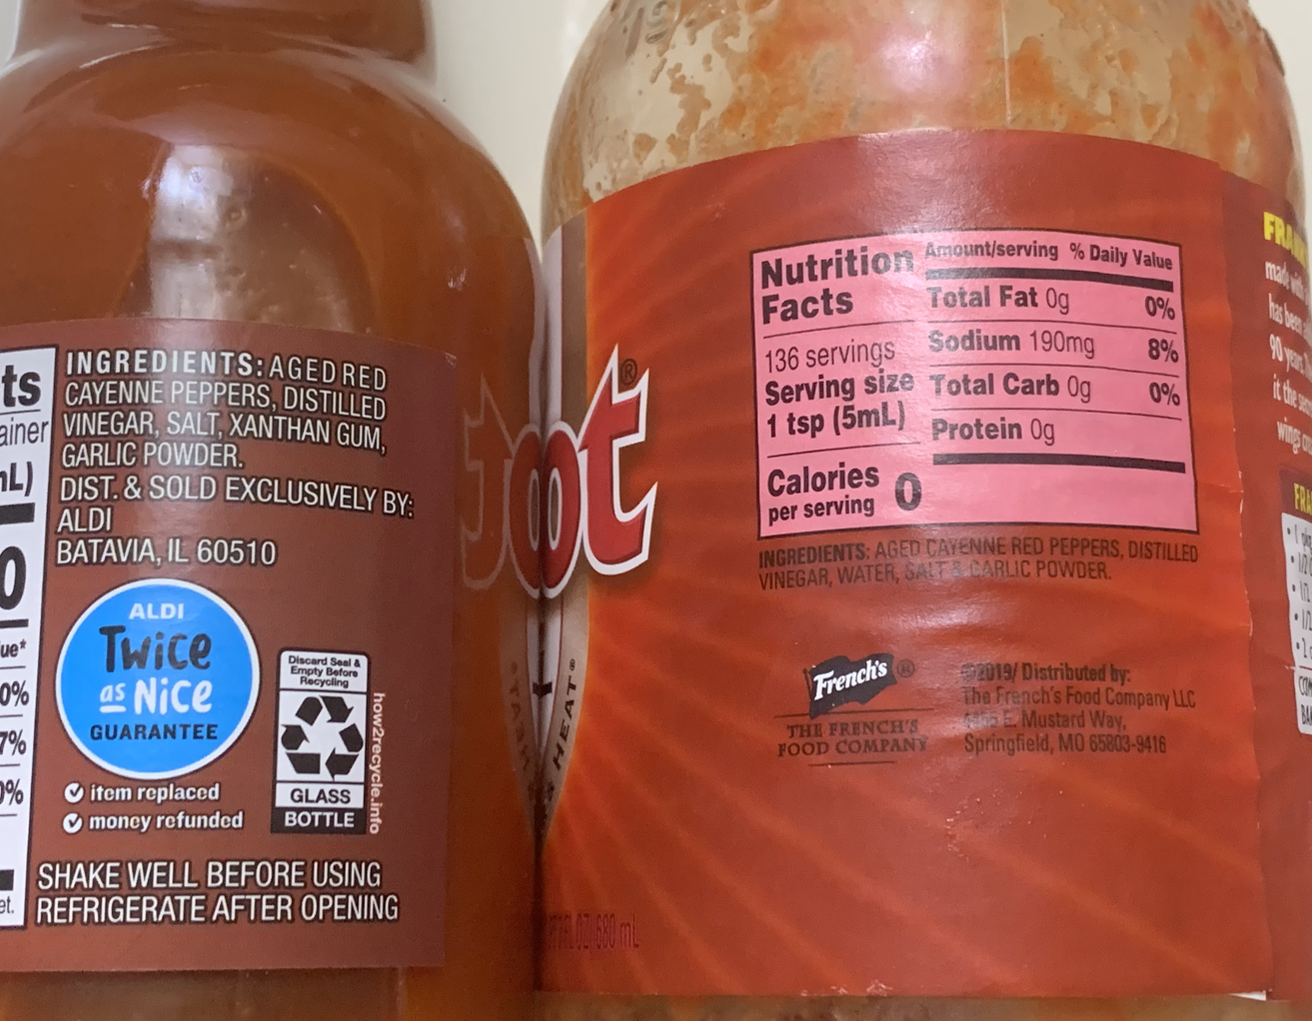 Aldi's Burman's Hot Sauce Vs. Red Hot Hot Sauce Review Ingredients List